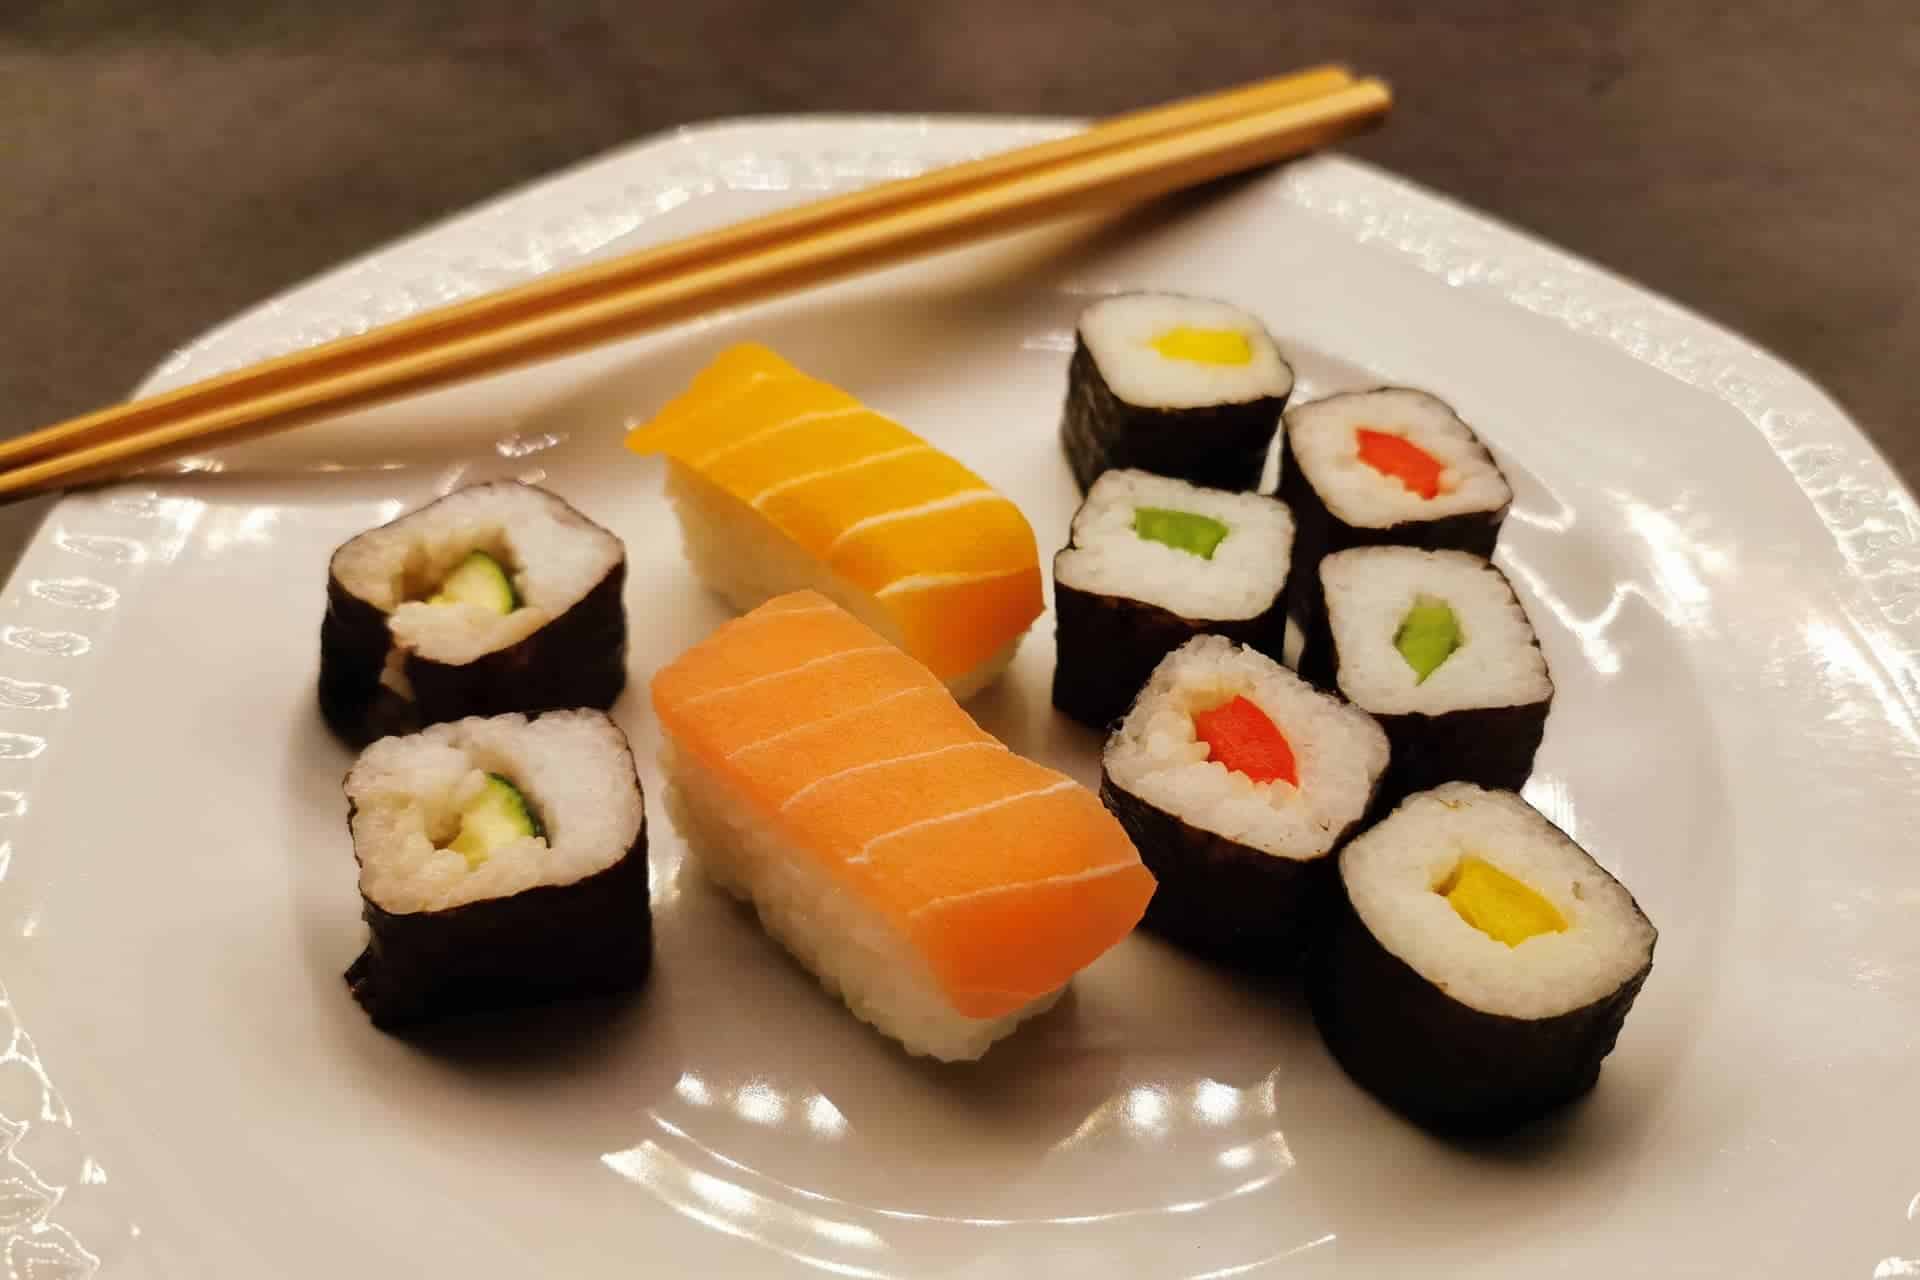 Food for Future - Kojo Sushi